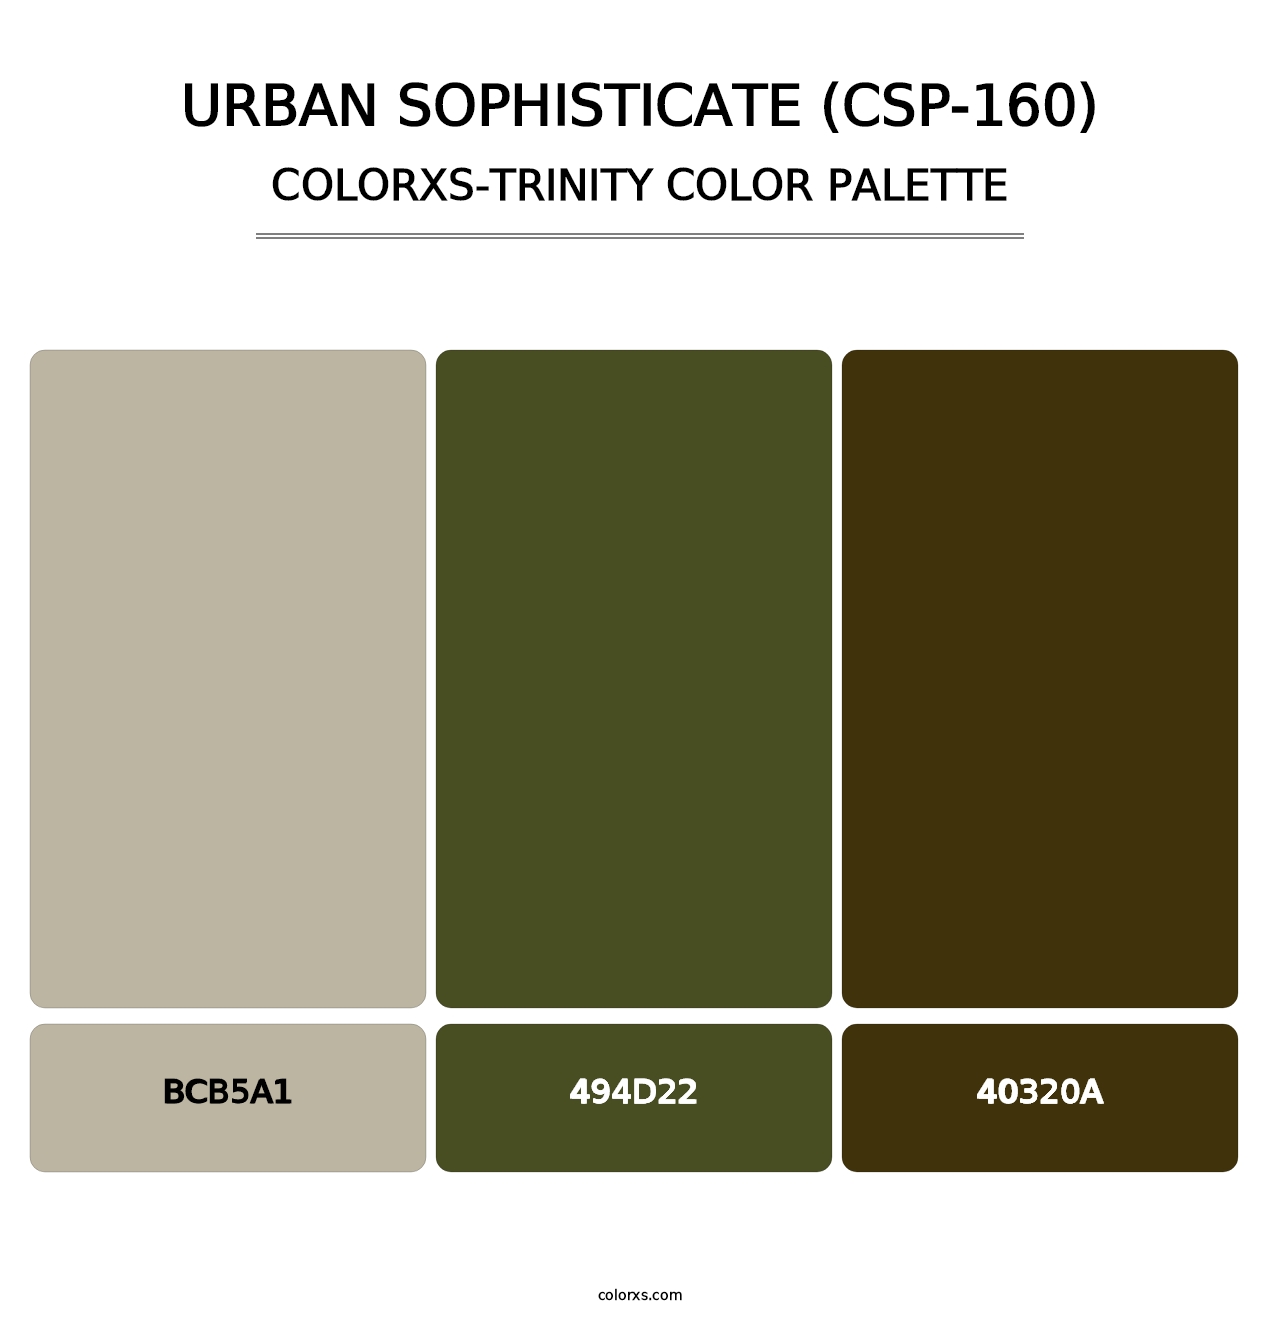 Urban Sophisticate (CSP-160) - Colorxs Trinity Palette